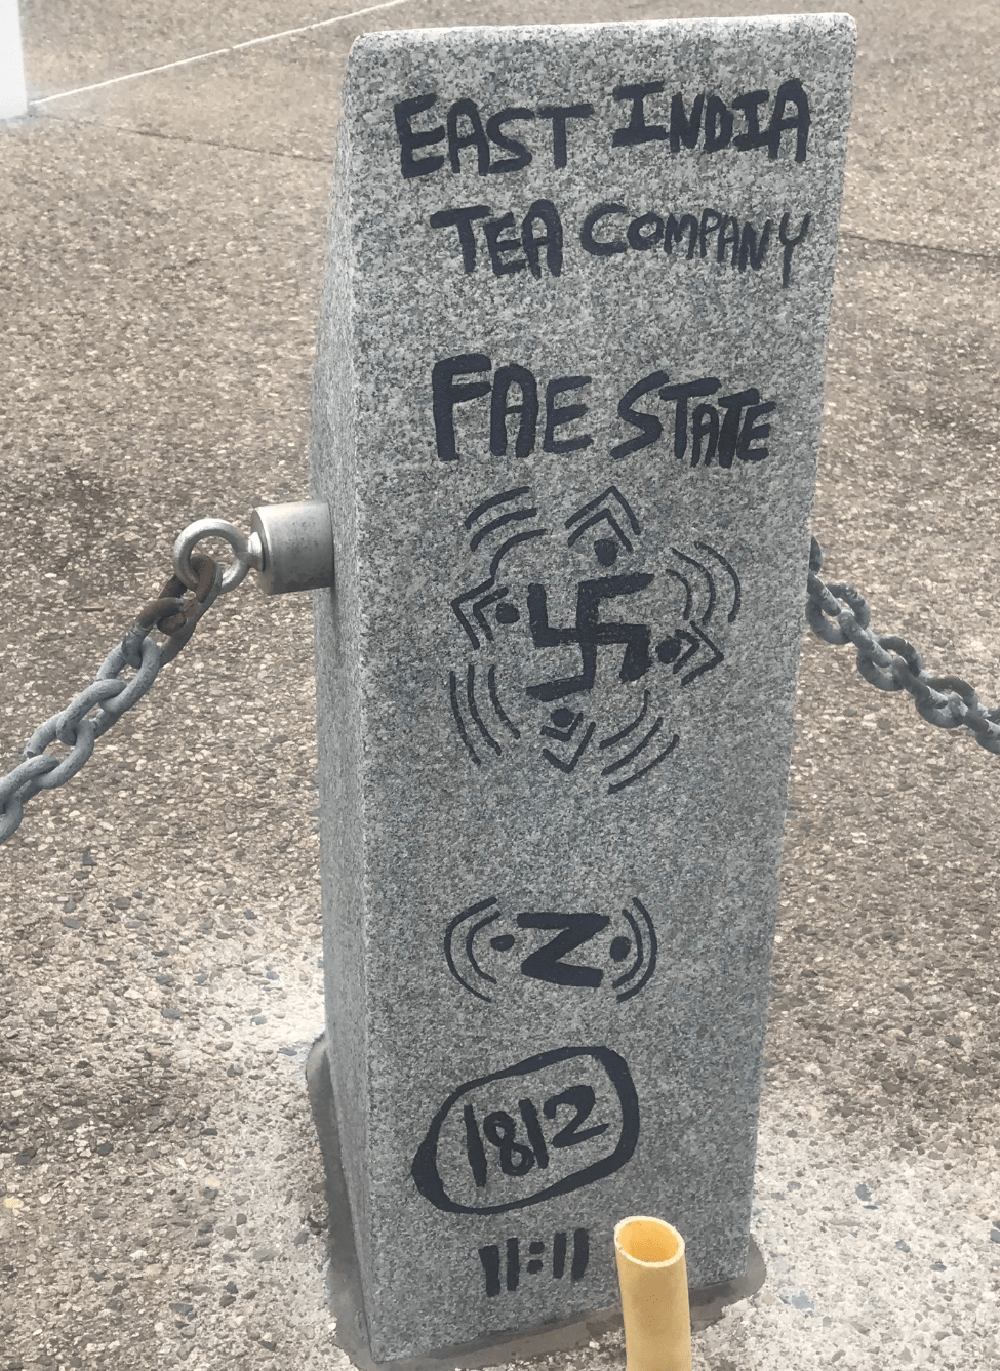 Graffiti found at the Vietnam Veterans monument at UMass Boston. (Photo/Mass. State Police)